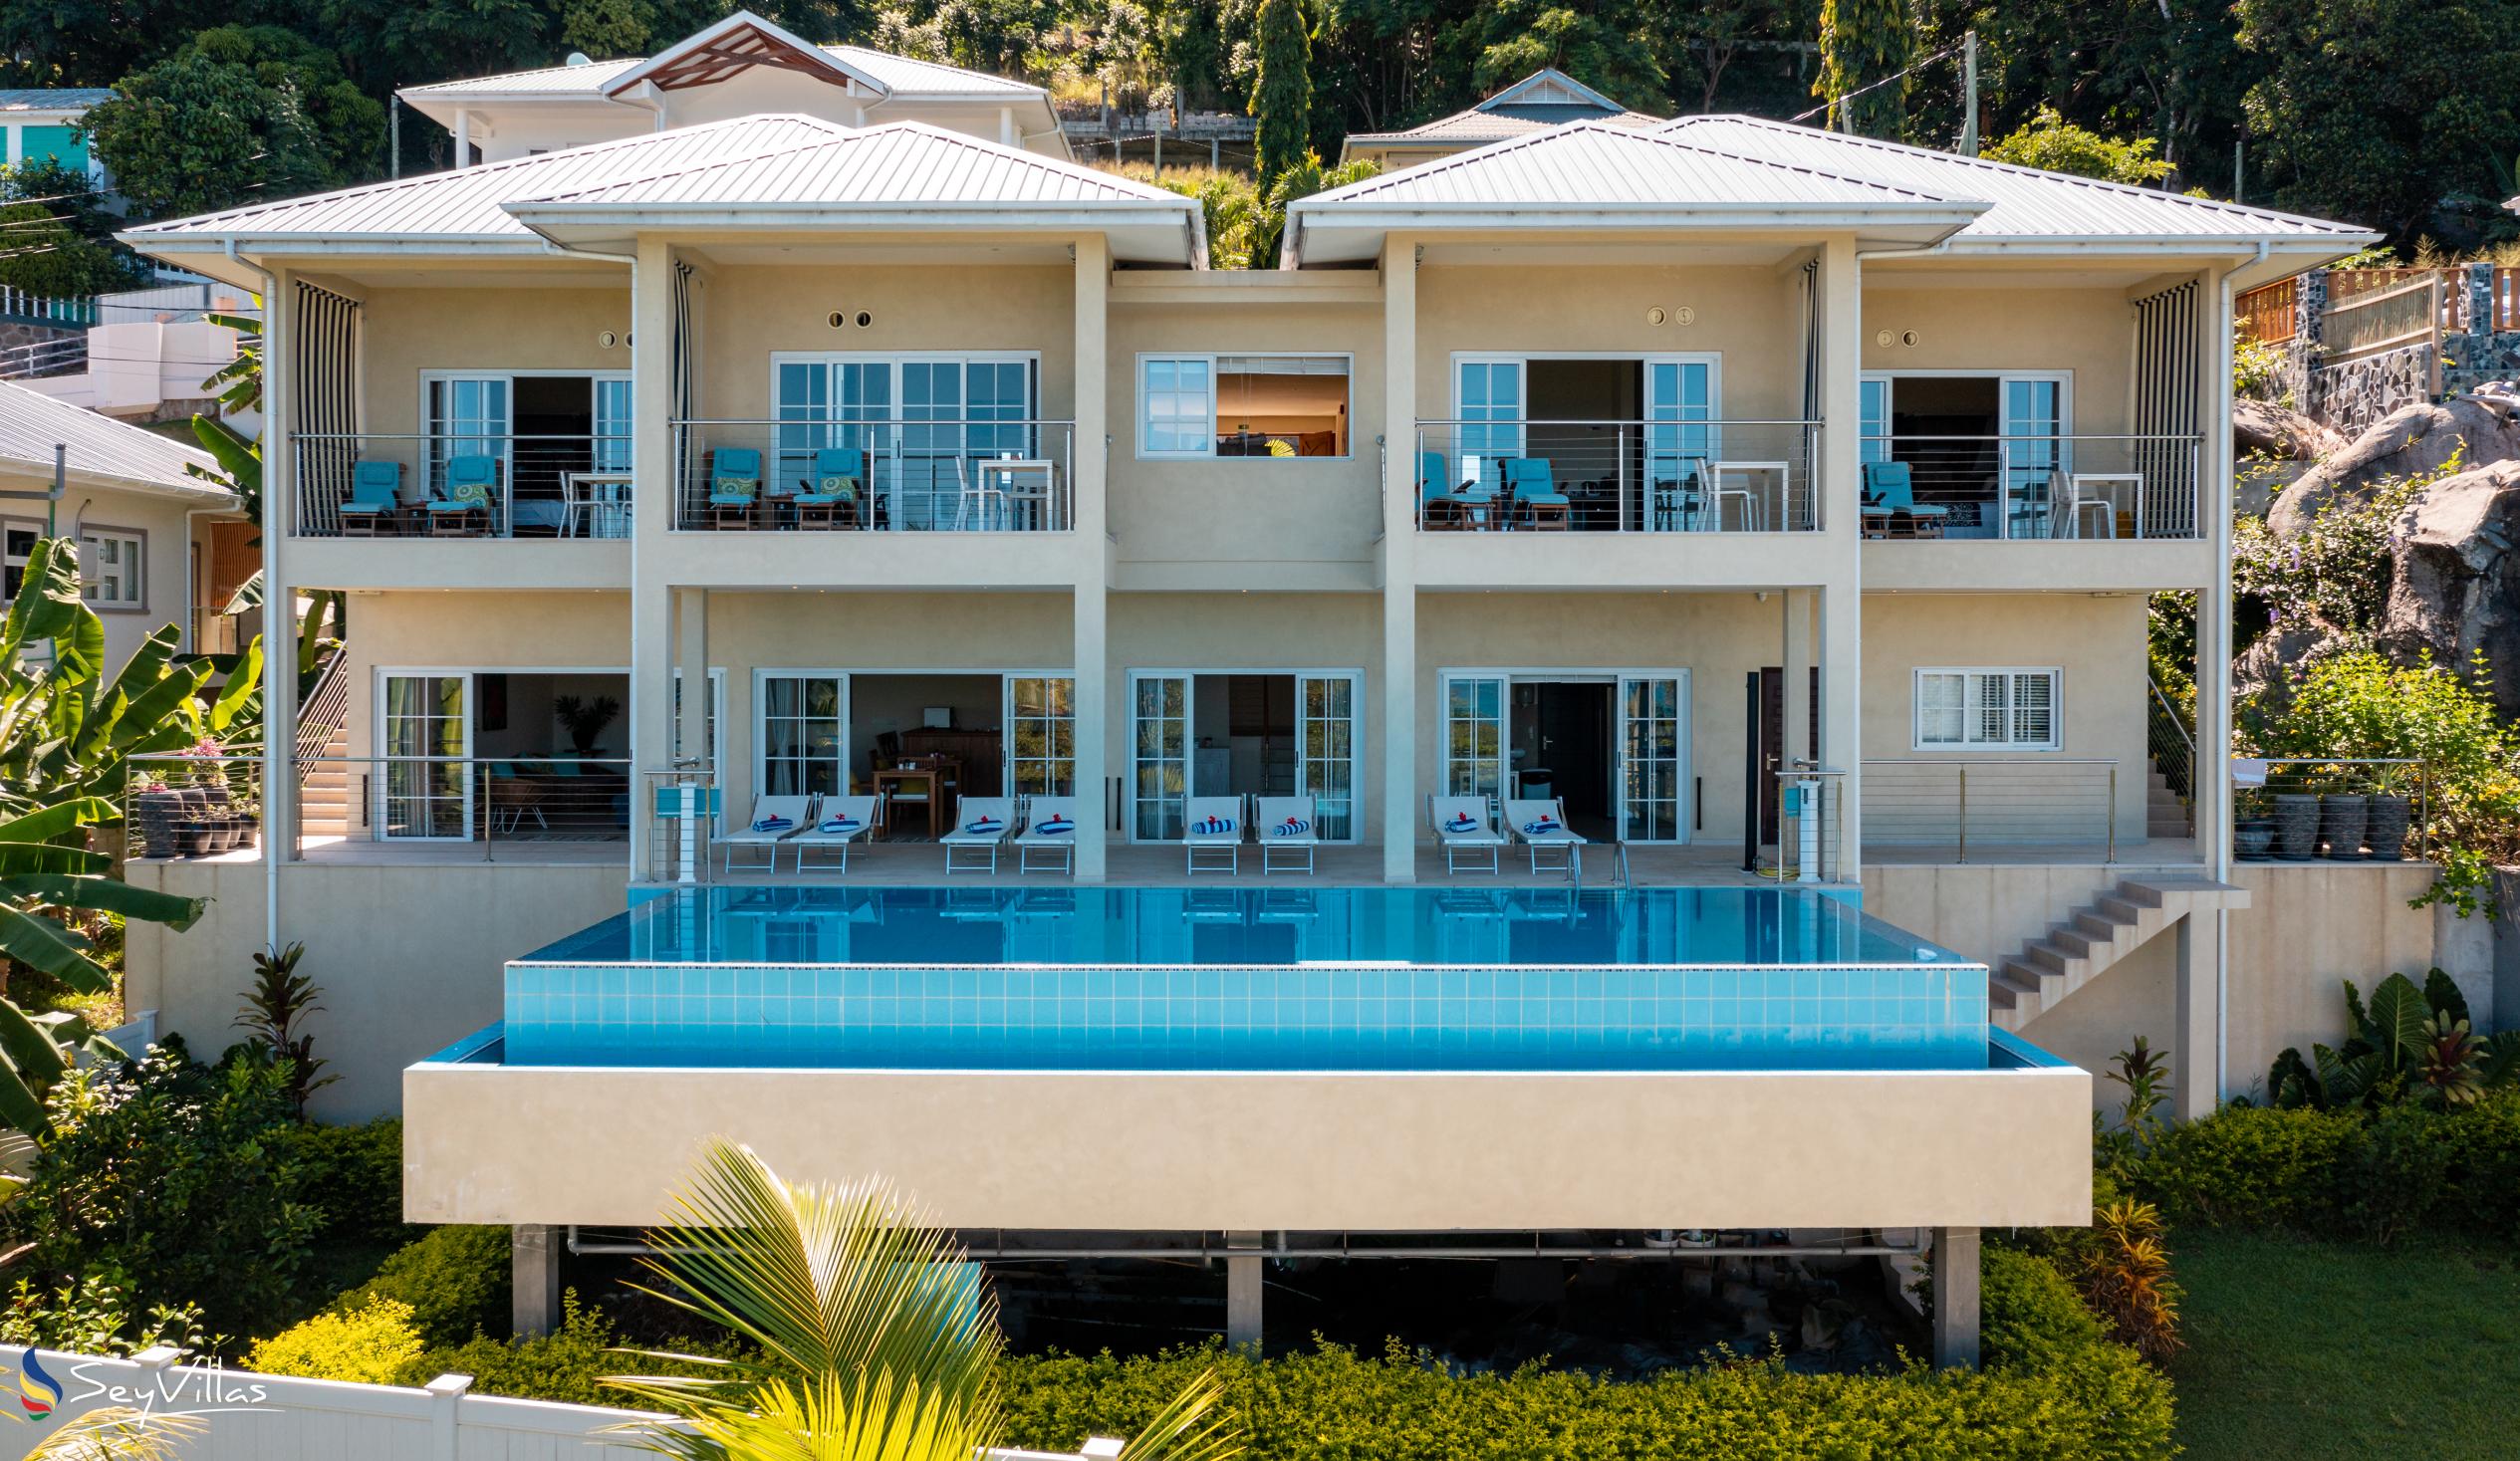 Photo 1: Villa Panoramic Seaview - Outdoor area - Mahé (Seychelles)